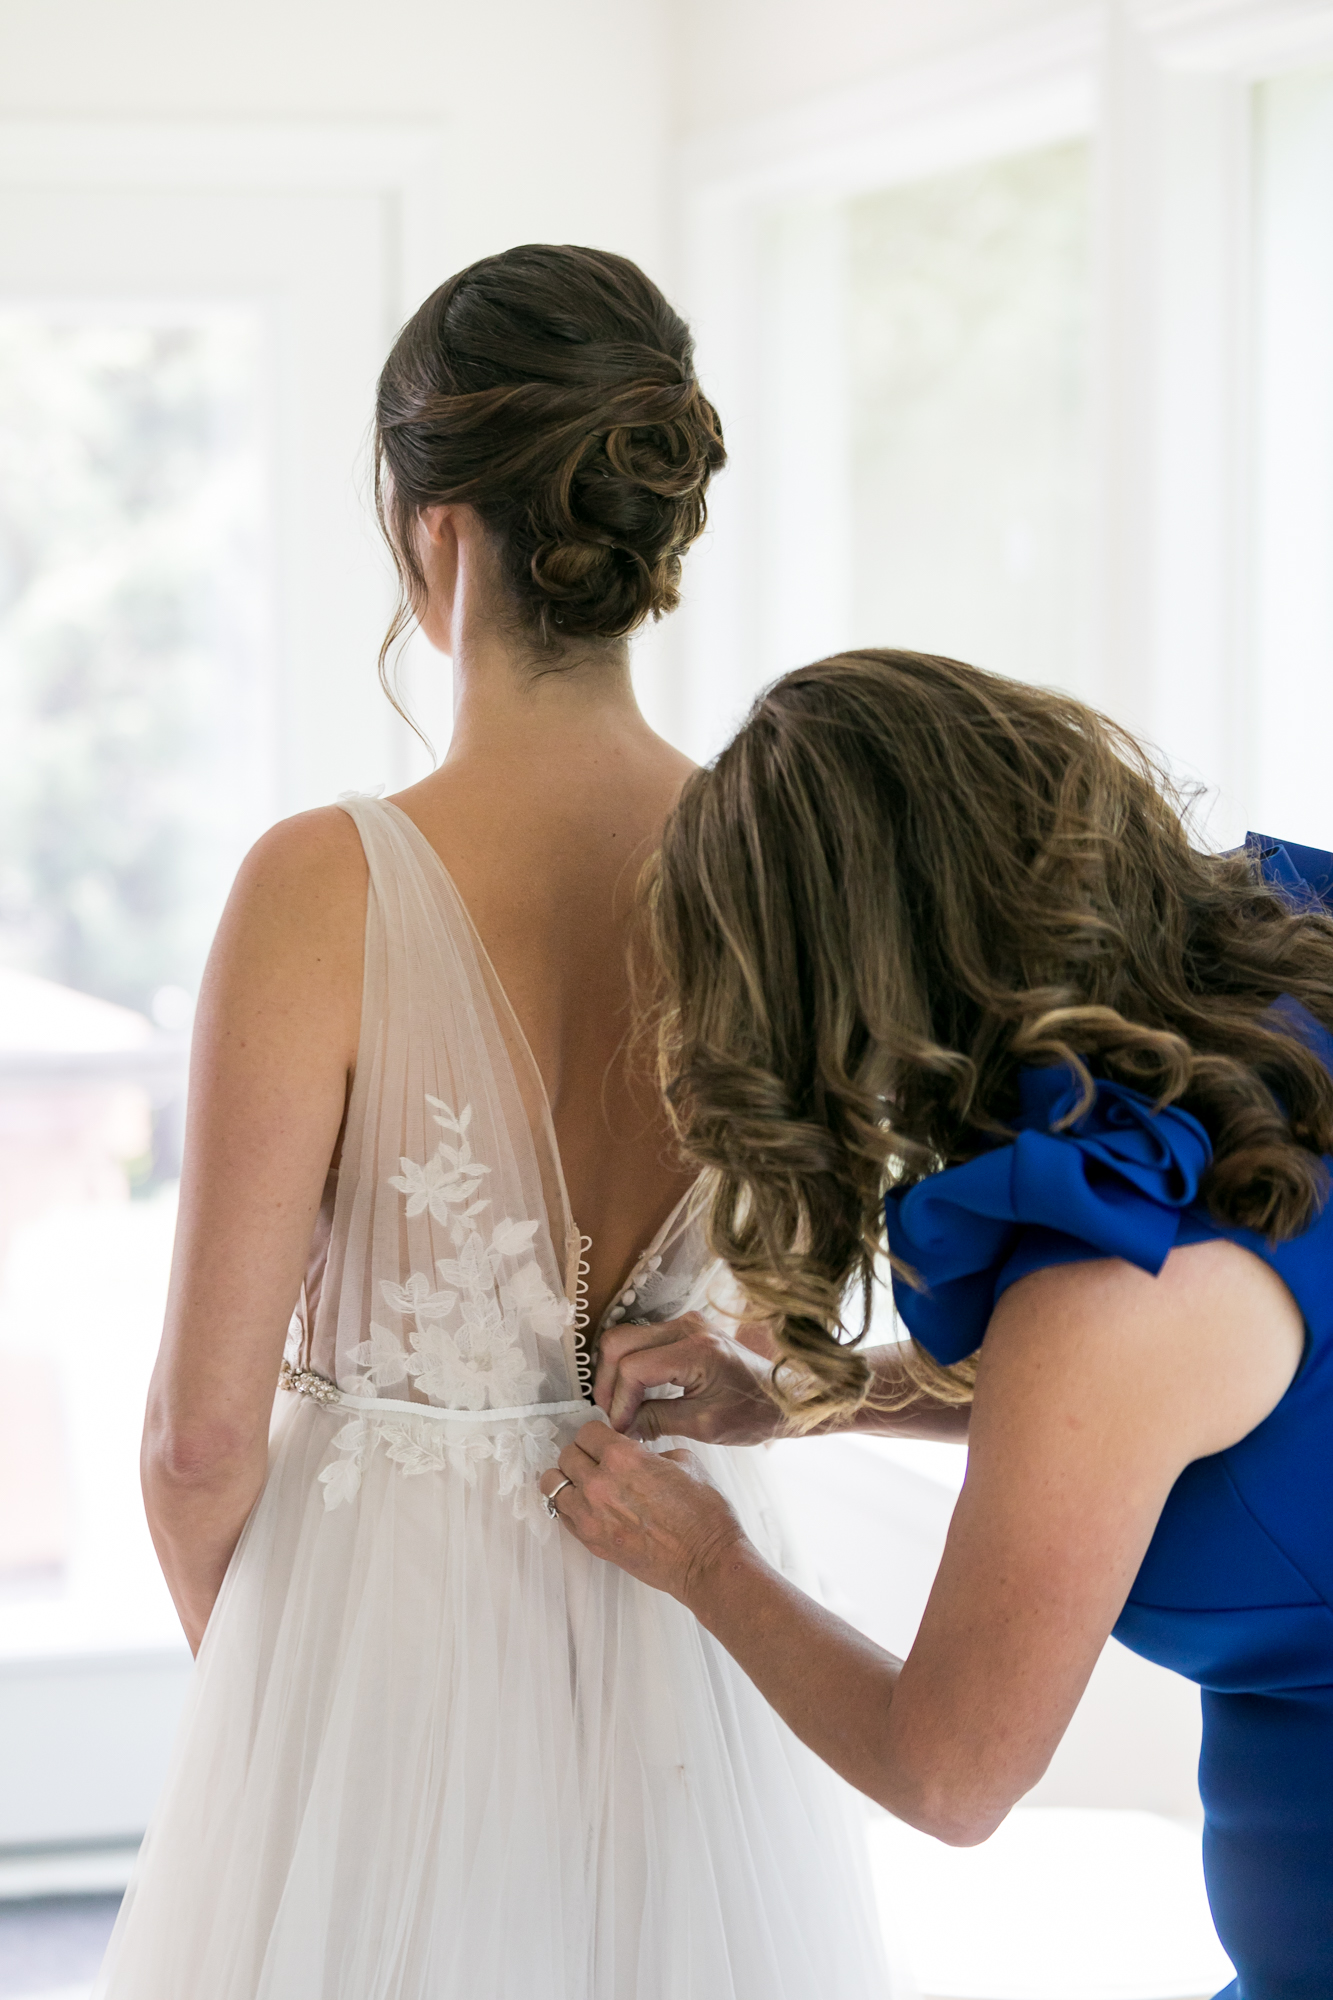 Mother of the bride helps the bride tie up her wedding dress